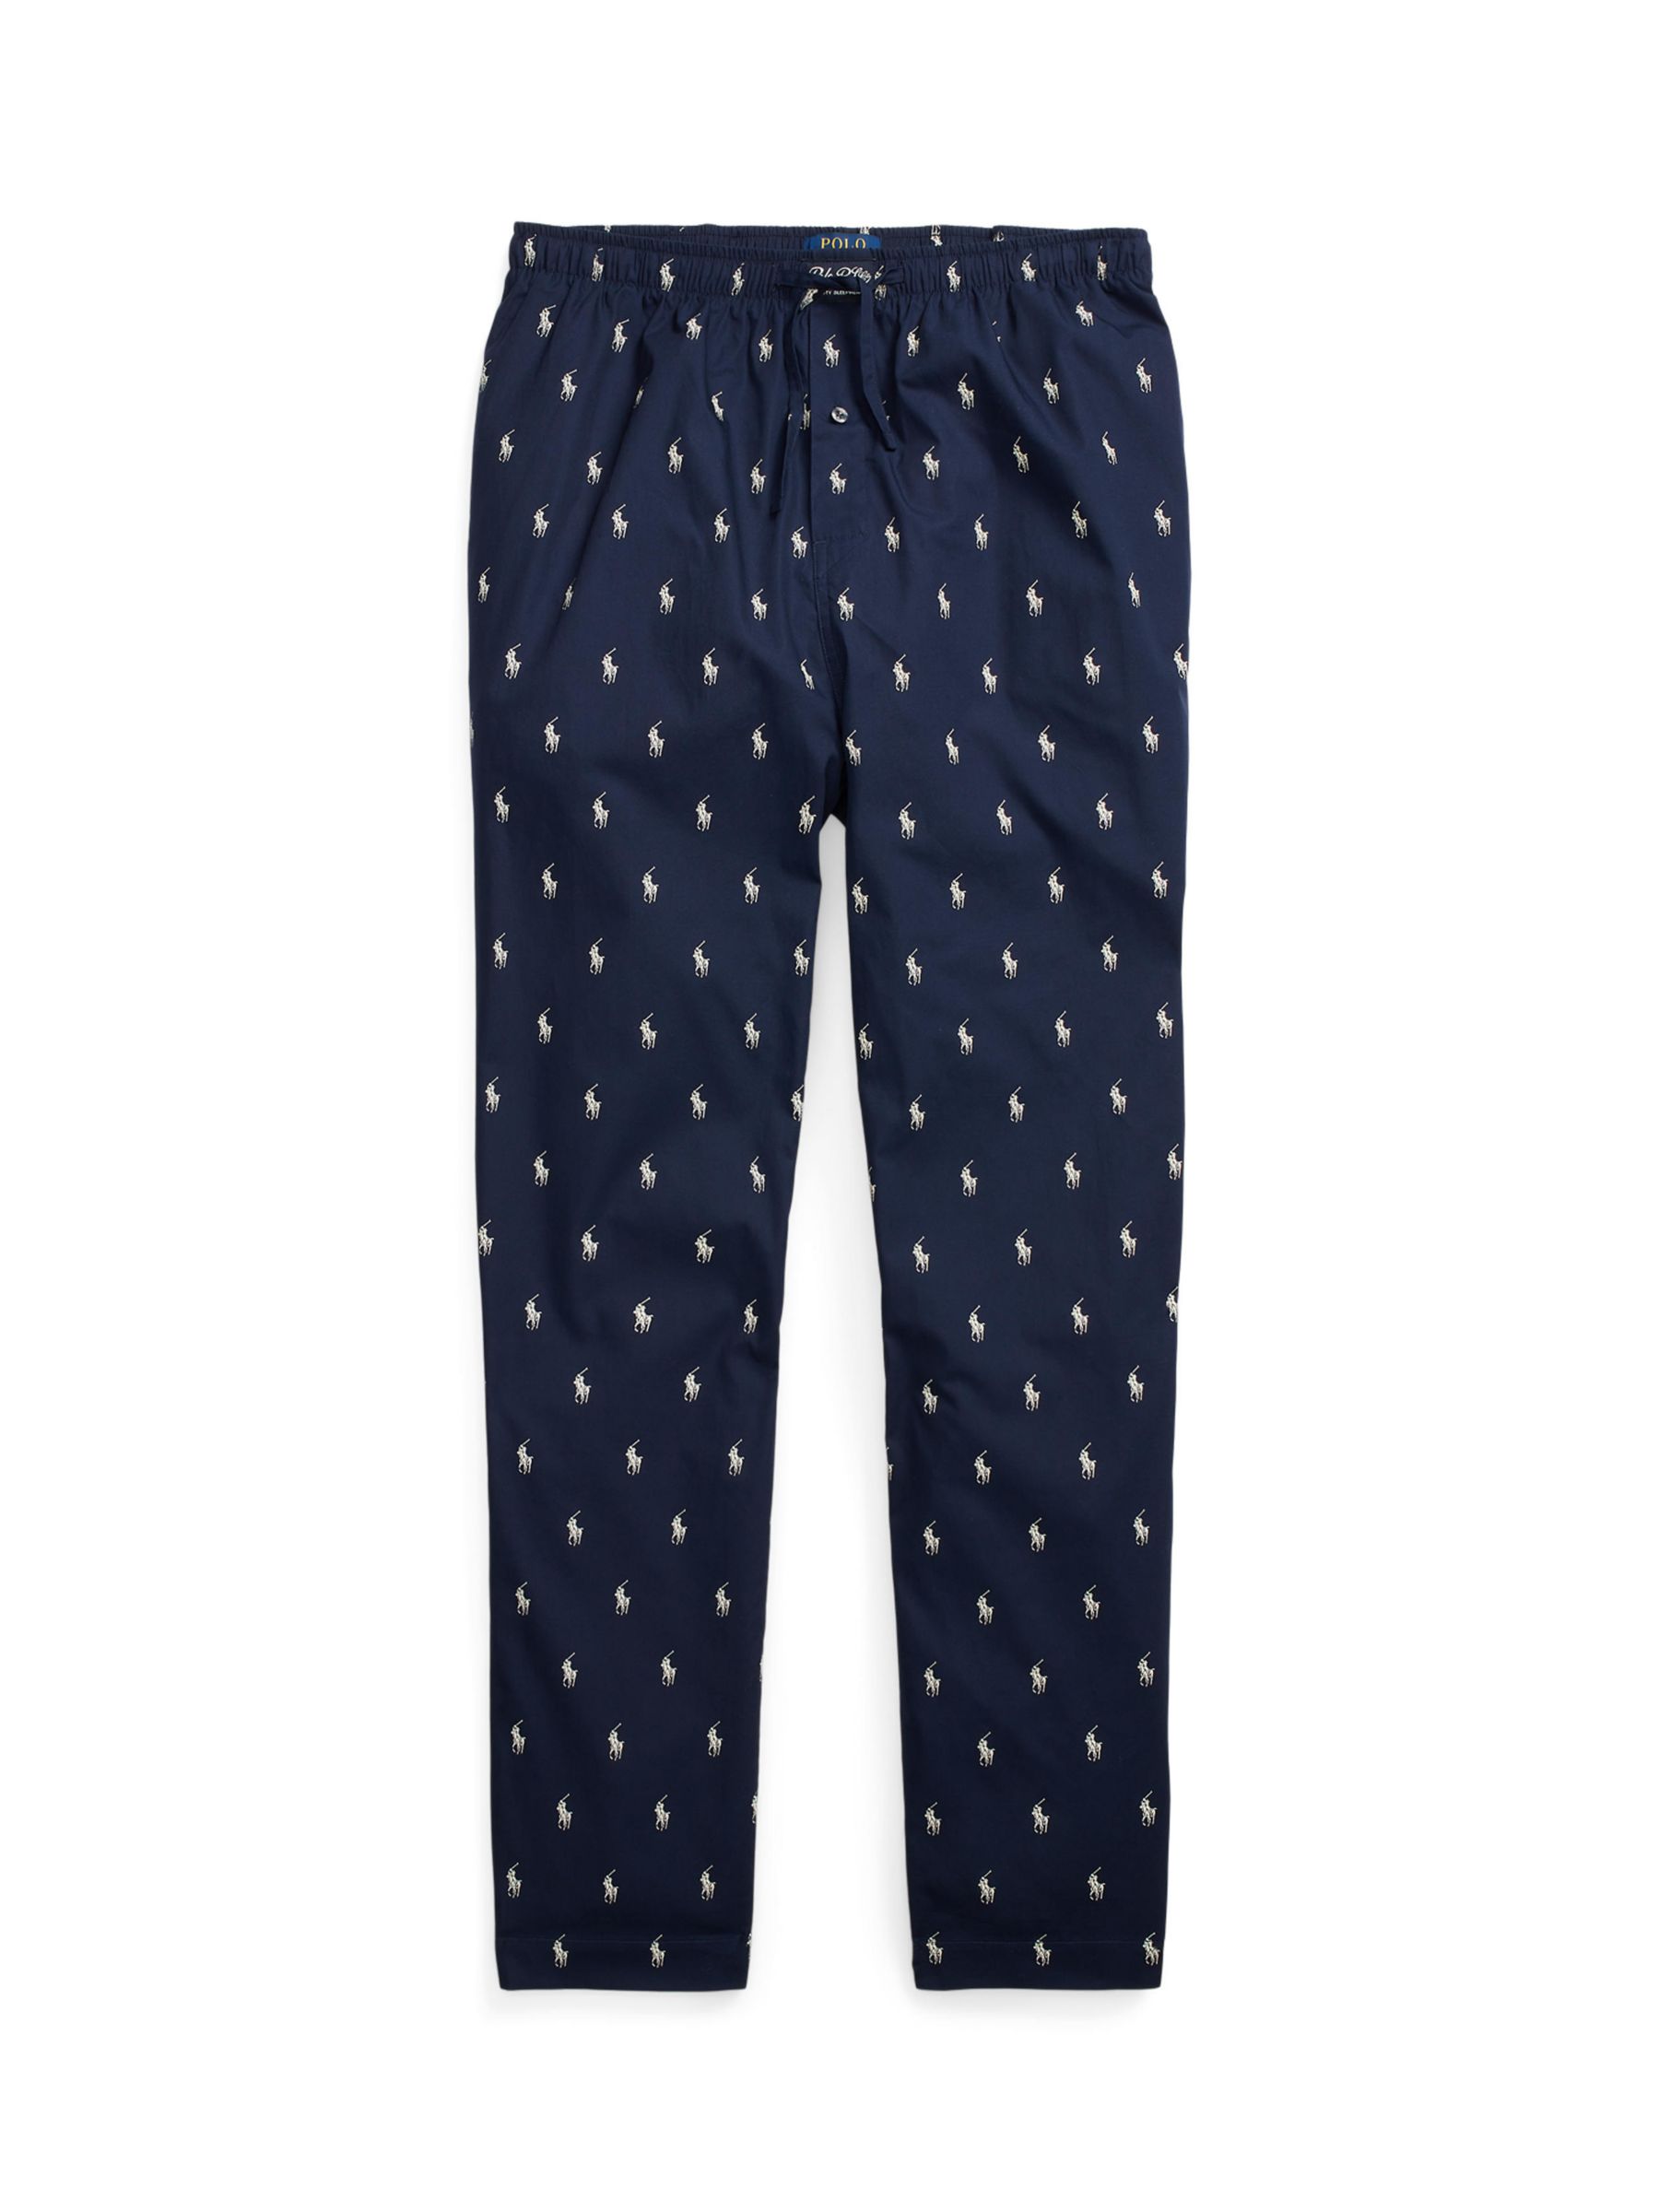 Polo Ralph Lauren Logo Pyjama Bottoms, Navy